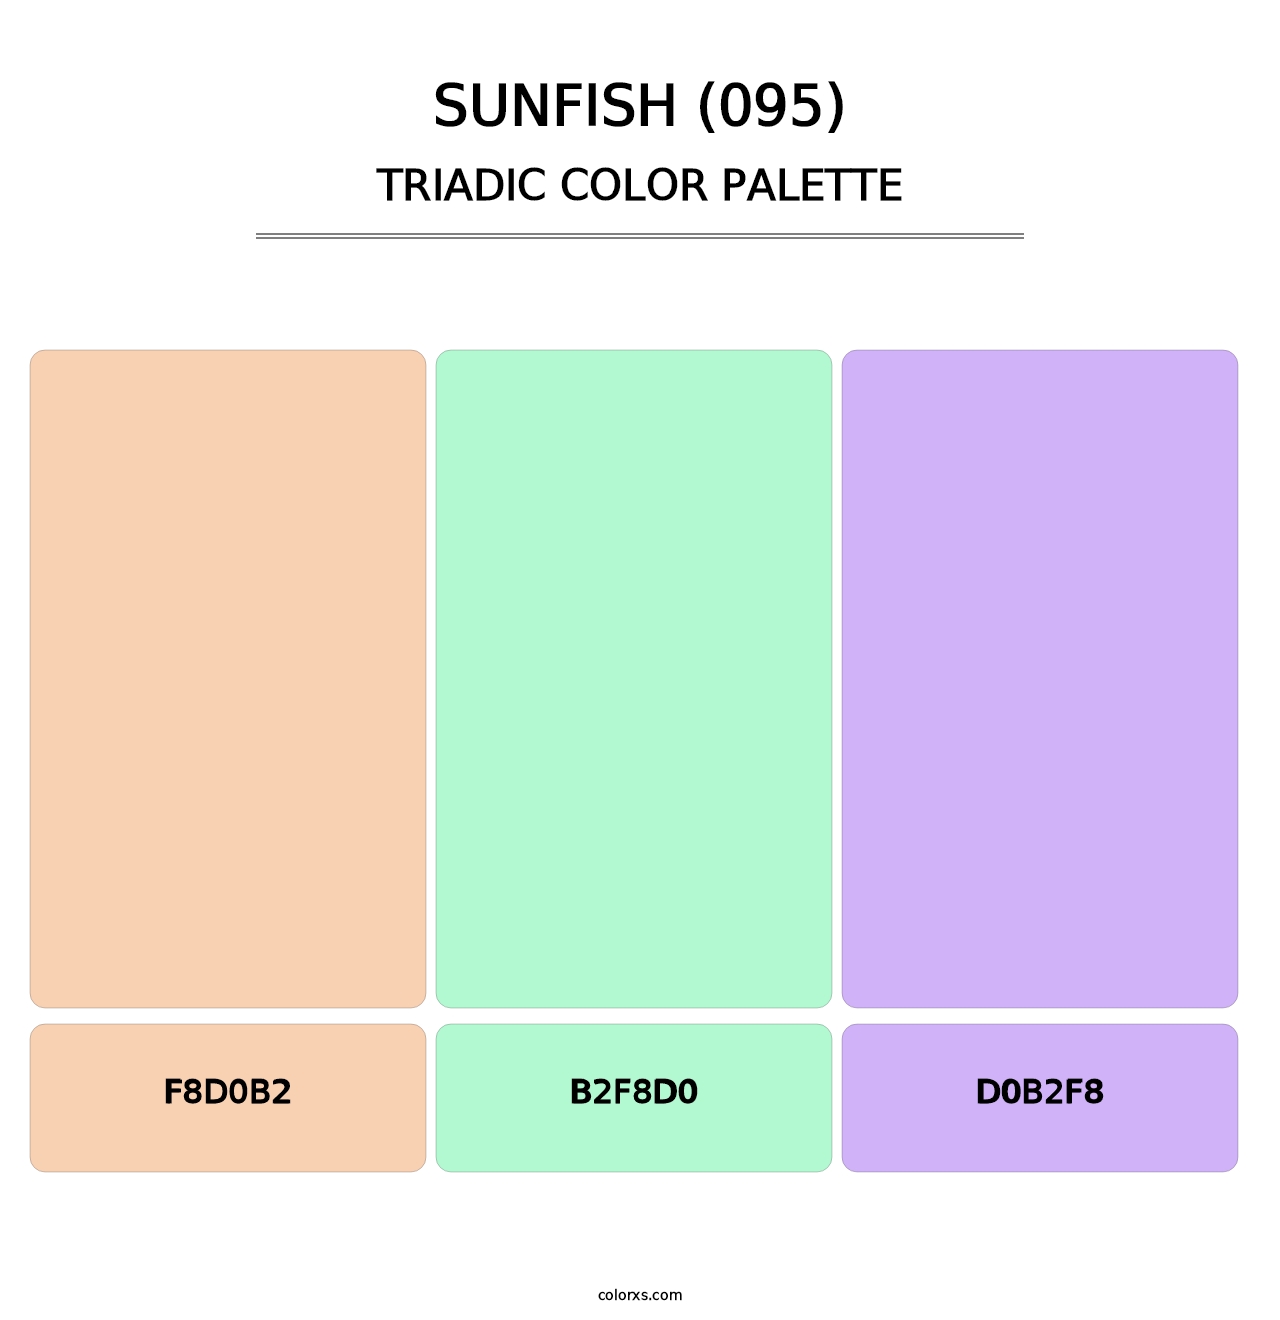 Sunfish (095) - Triadic Color Palette